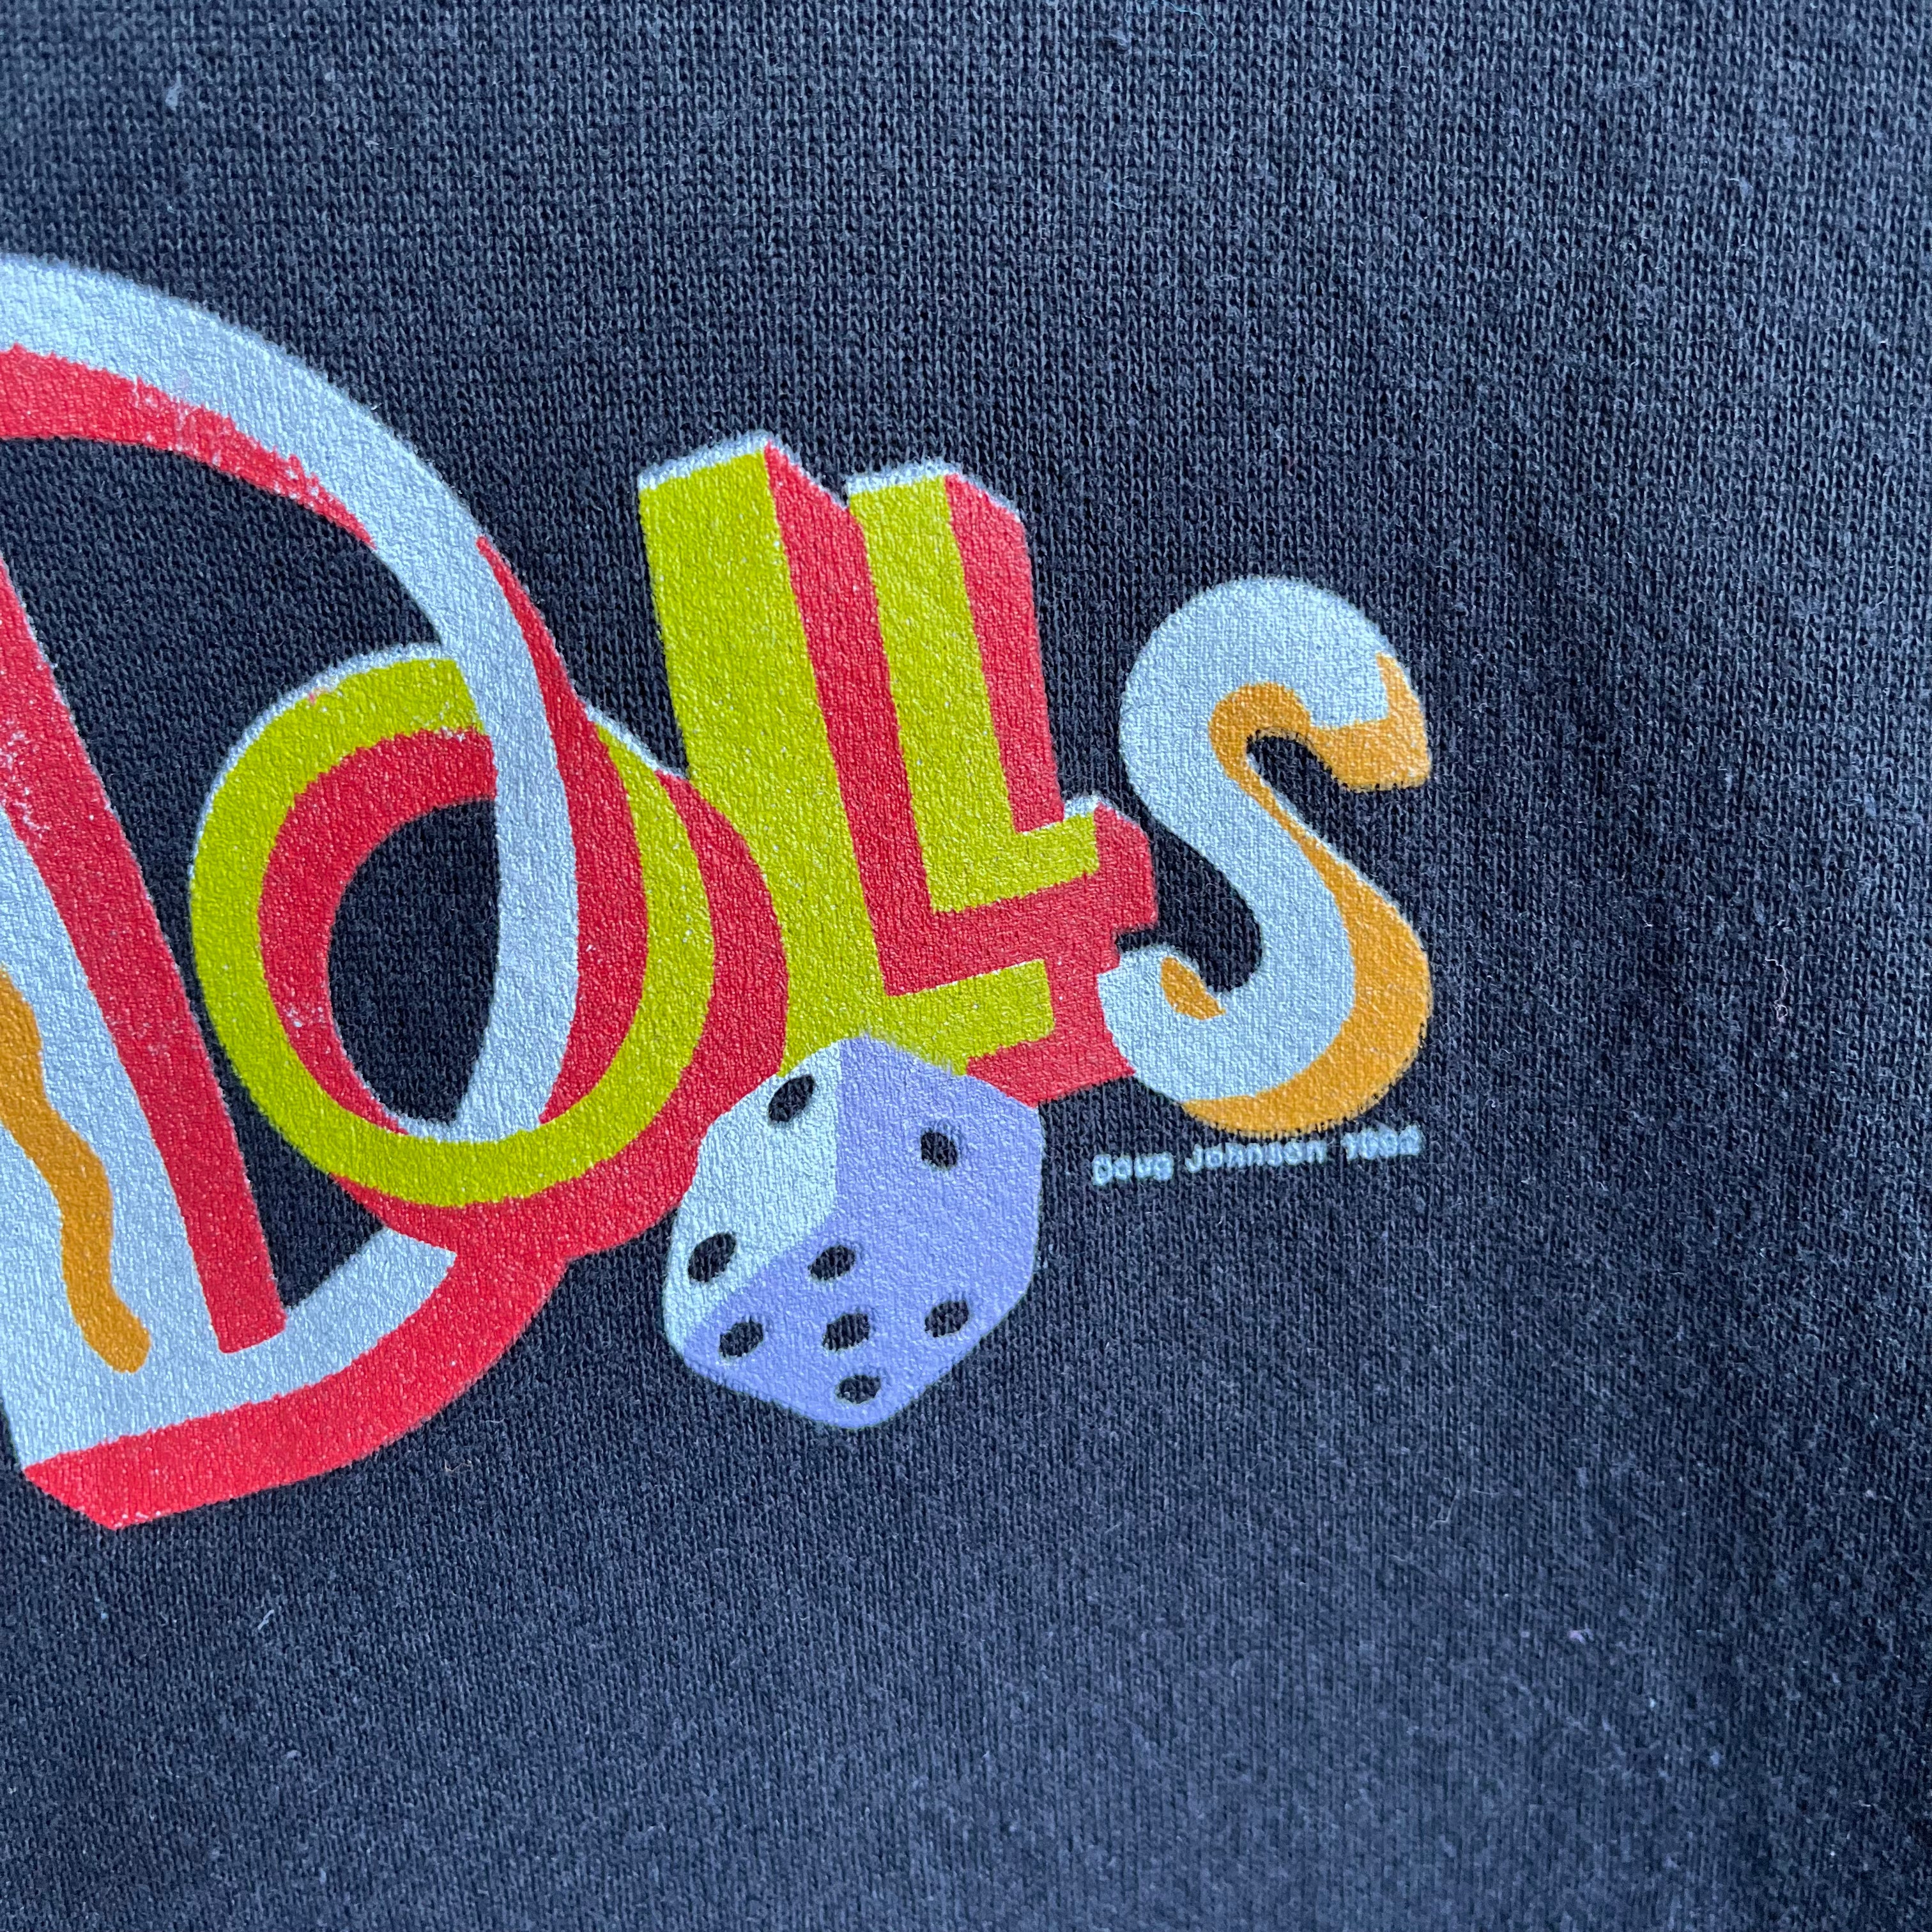 1992 Guys and Dolls The Musical Sweatshirt